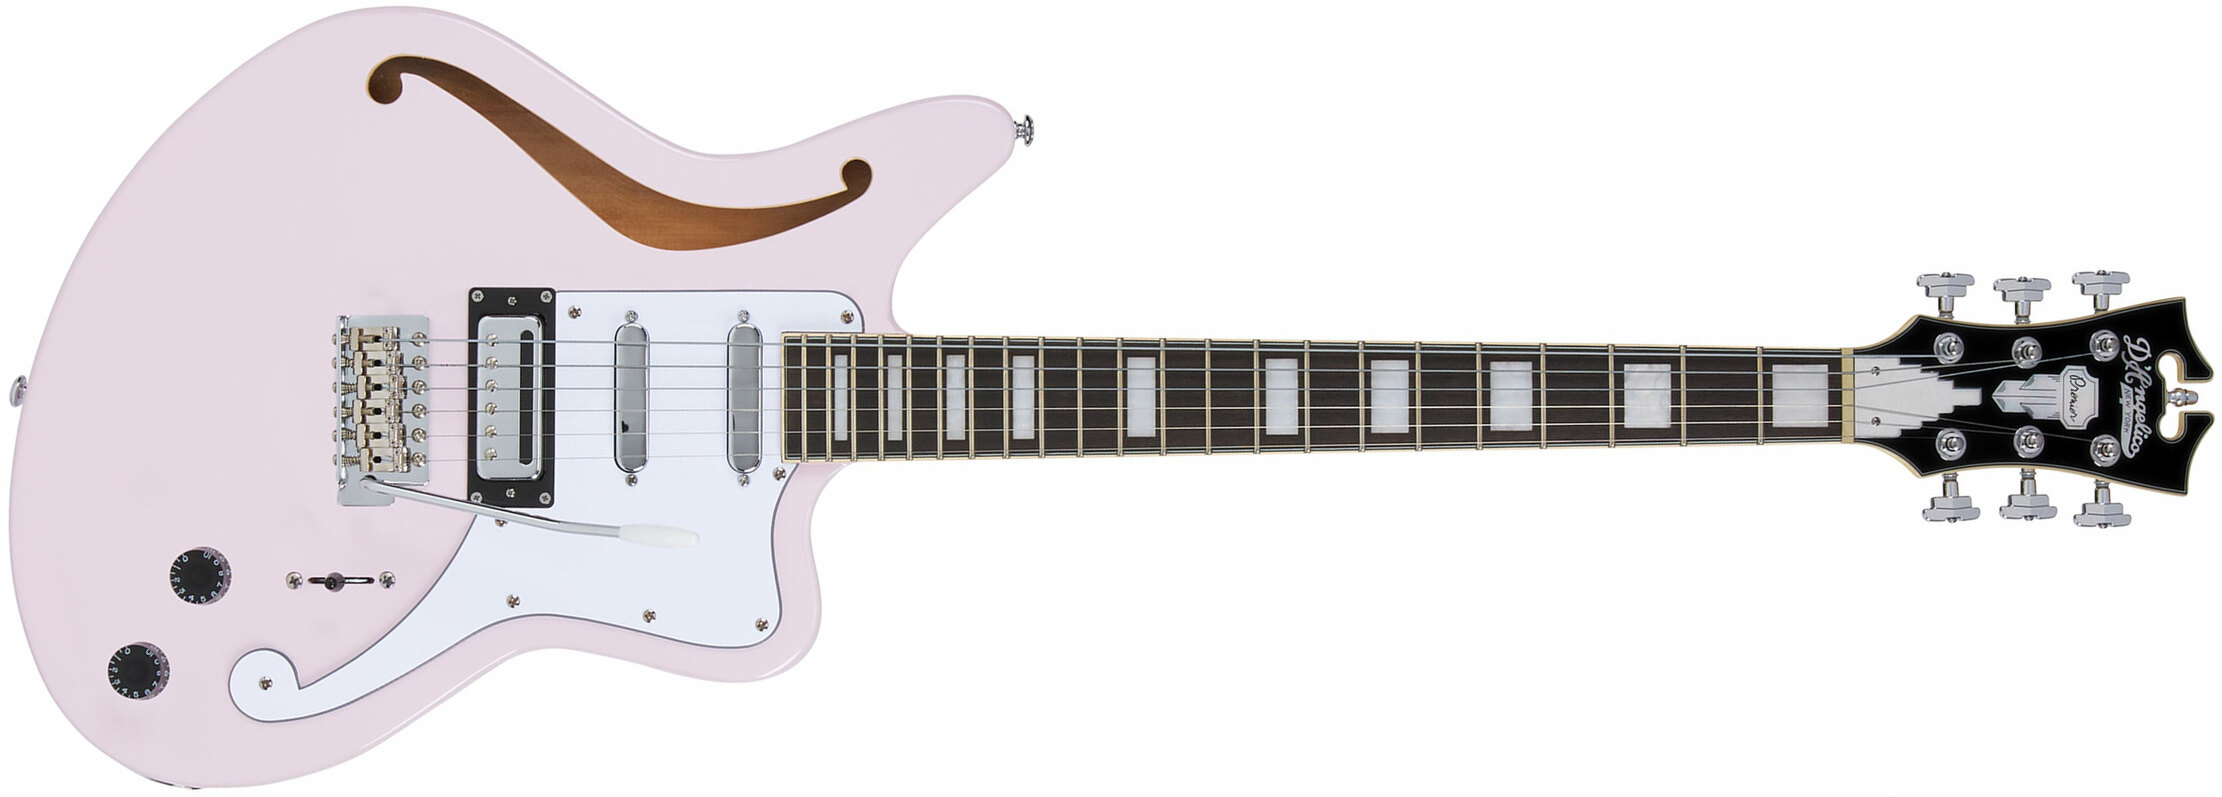 D'angelico Bedford Sh Premier Hss Trem Ova - Shell Pink - Semi hollow elektriche gitaar - Main picture